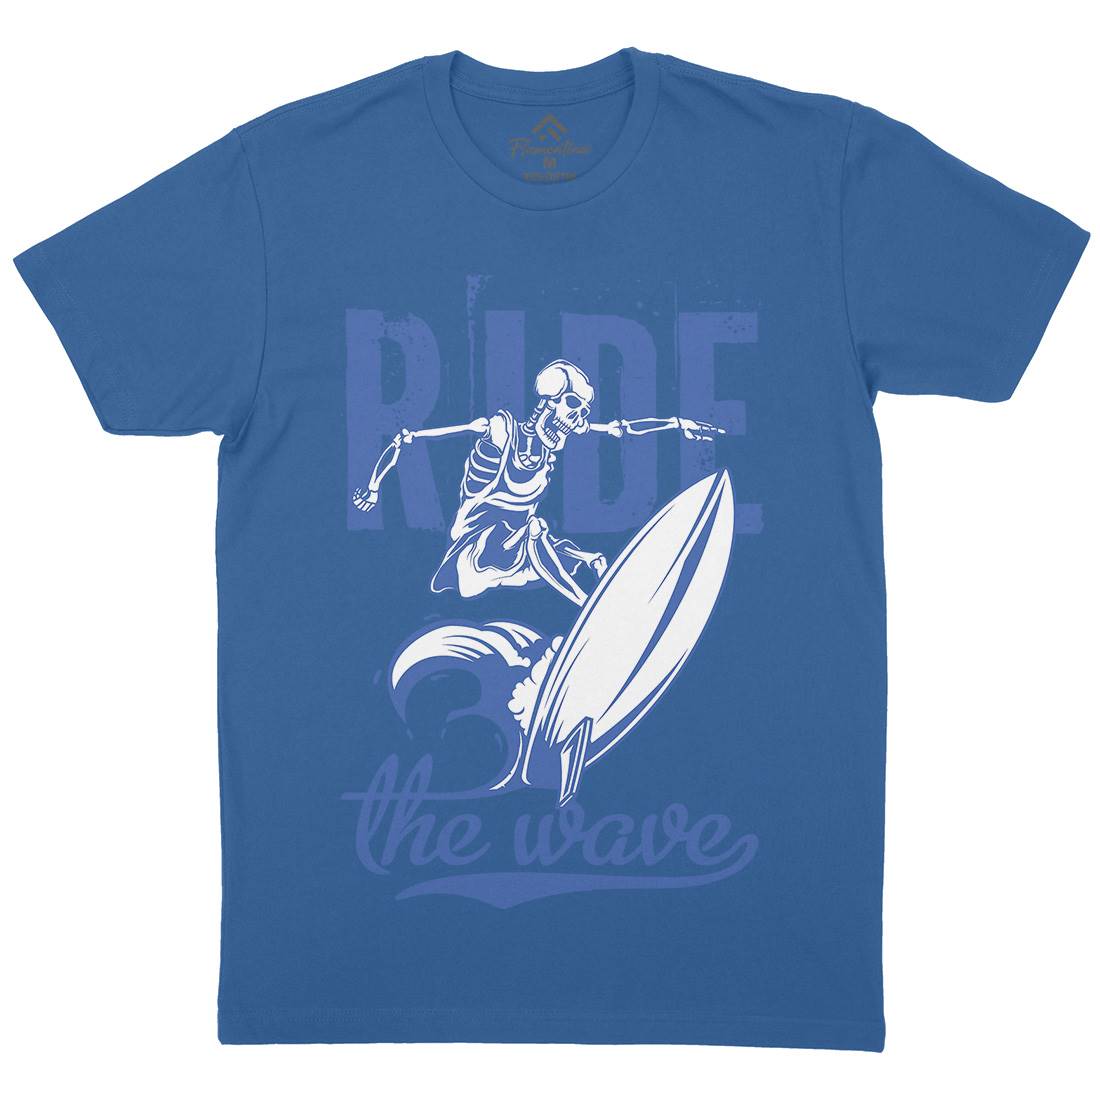 Ride Wave Surfing Mens Crew Neck T-Shirt Surf B173